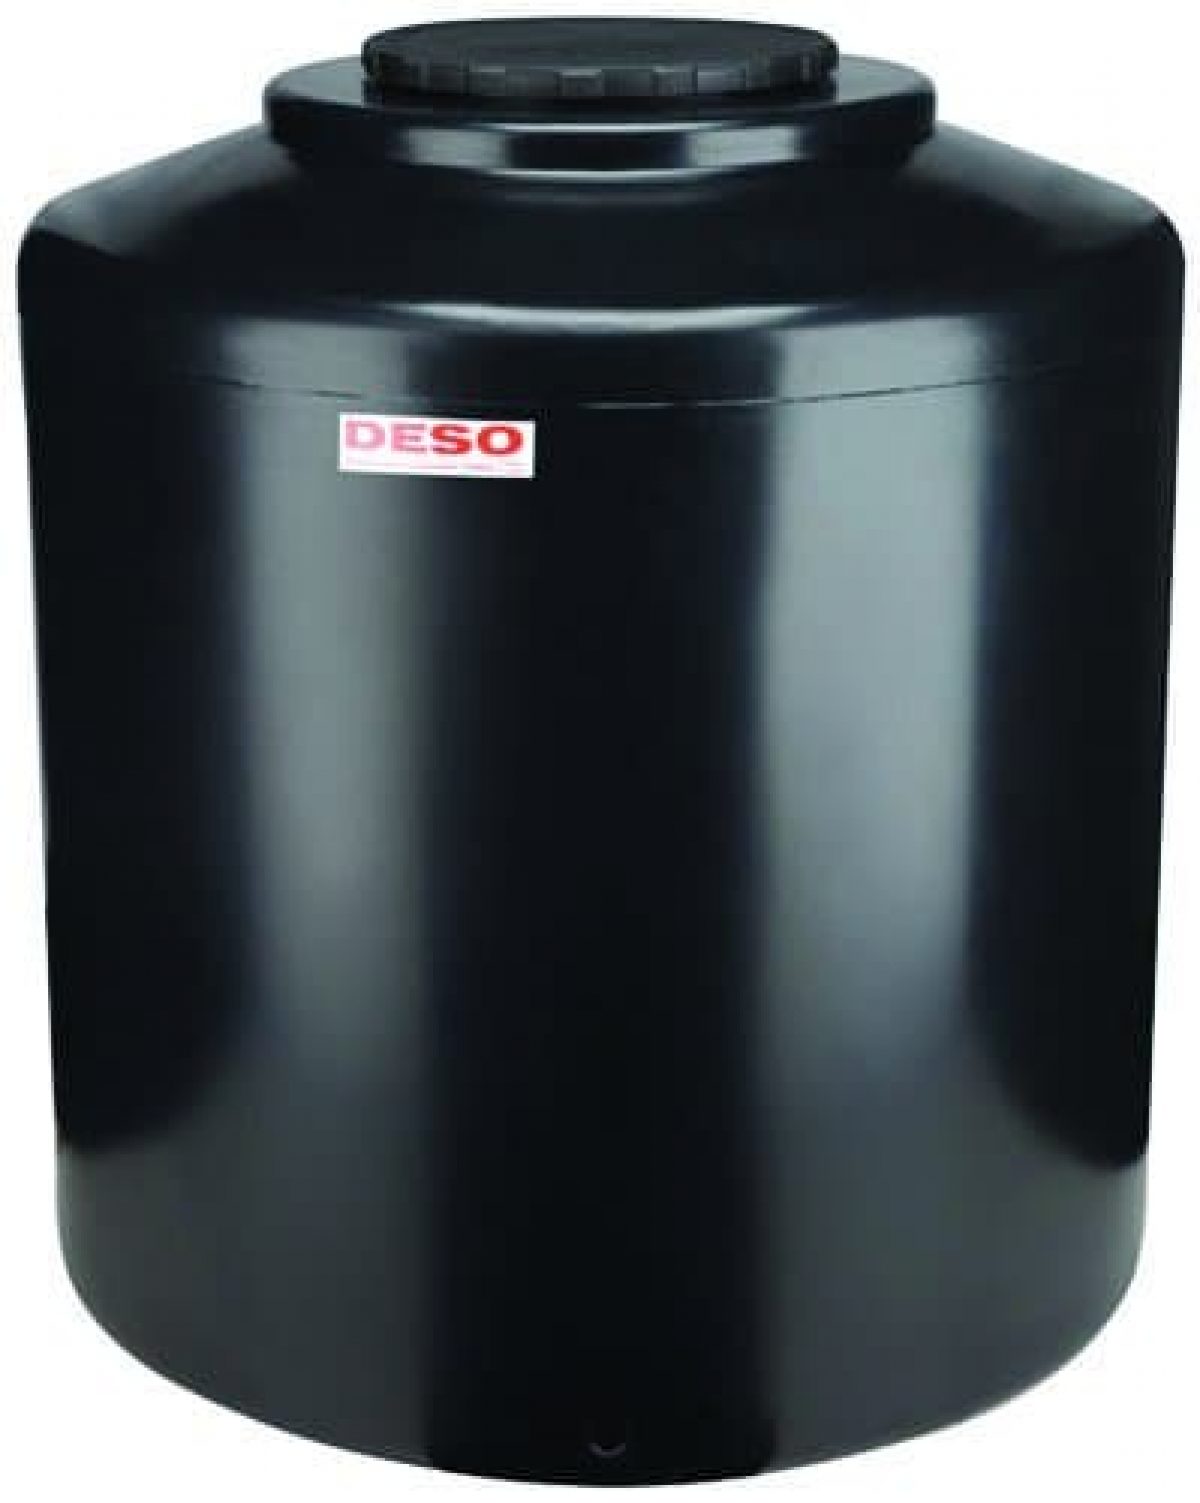 Deso V1200 Plastic Water Tank Buy from Total